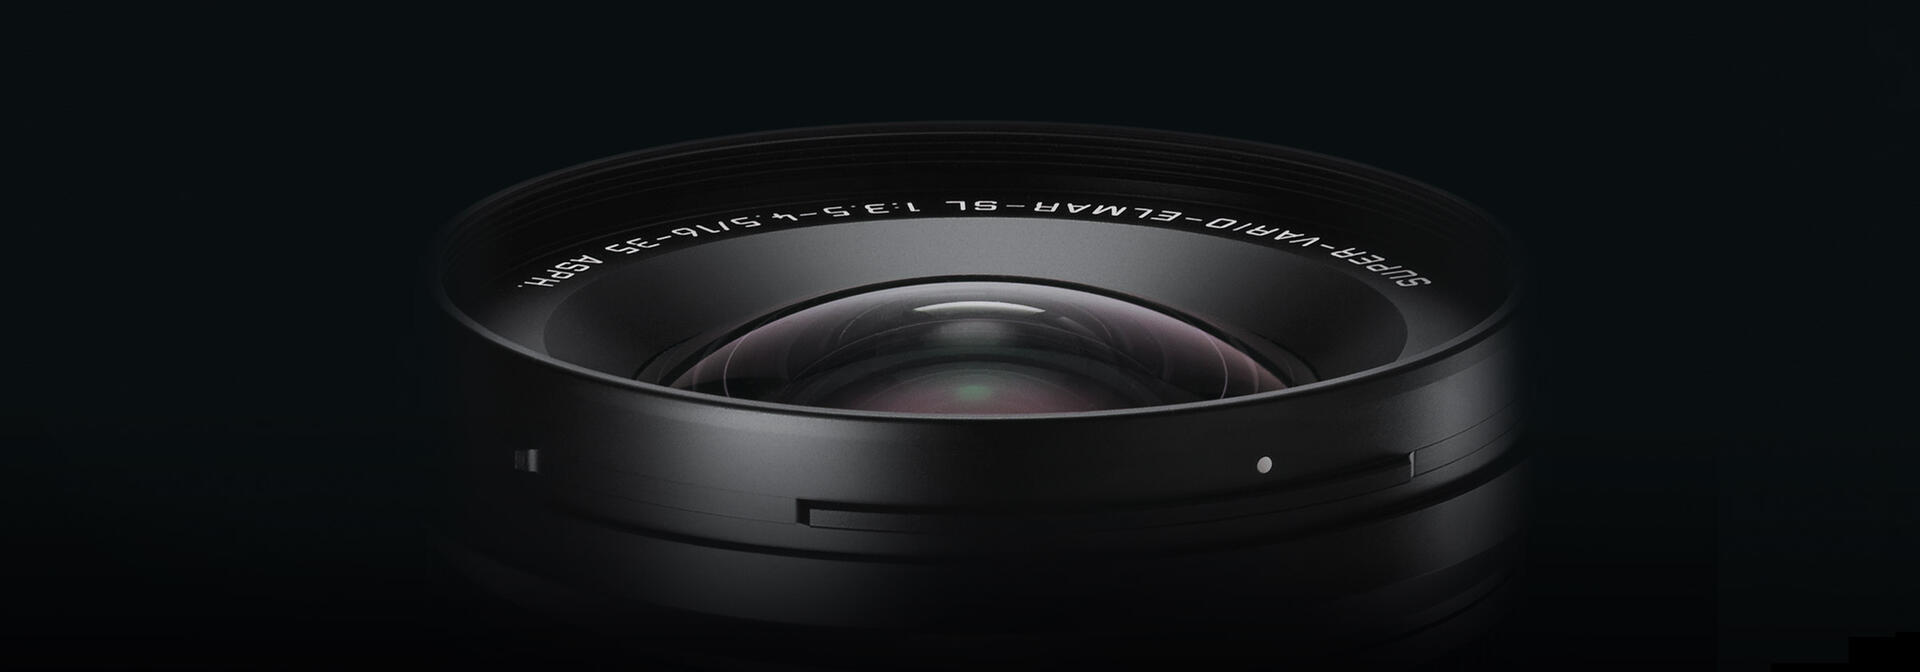 Leica レンズ スーパーバリオエルマーSL 16-35F3.5-4.5